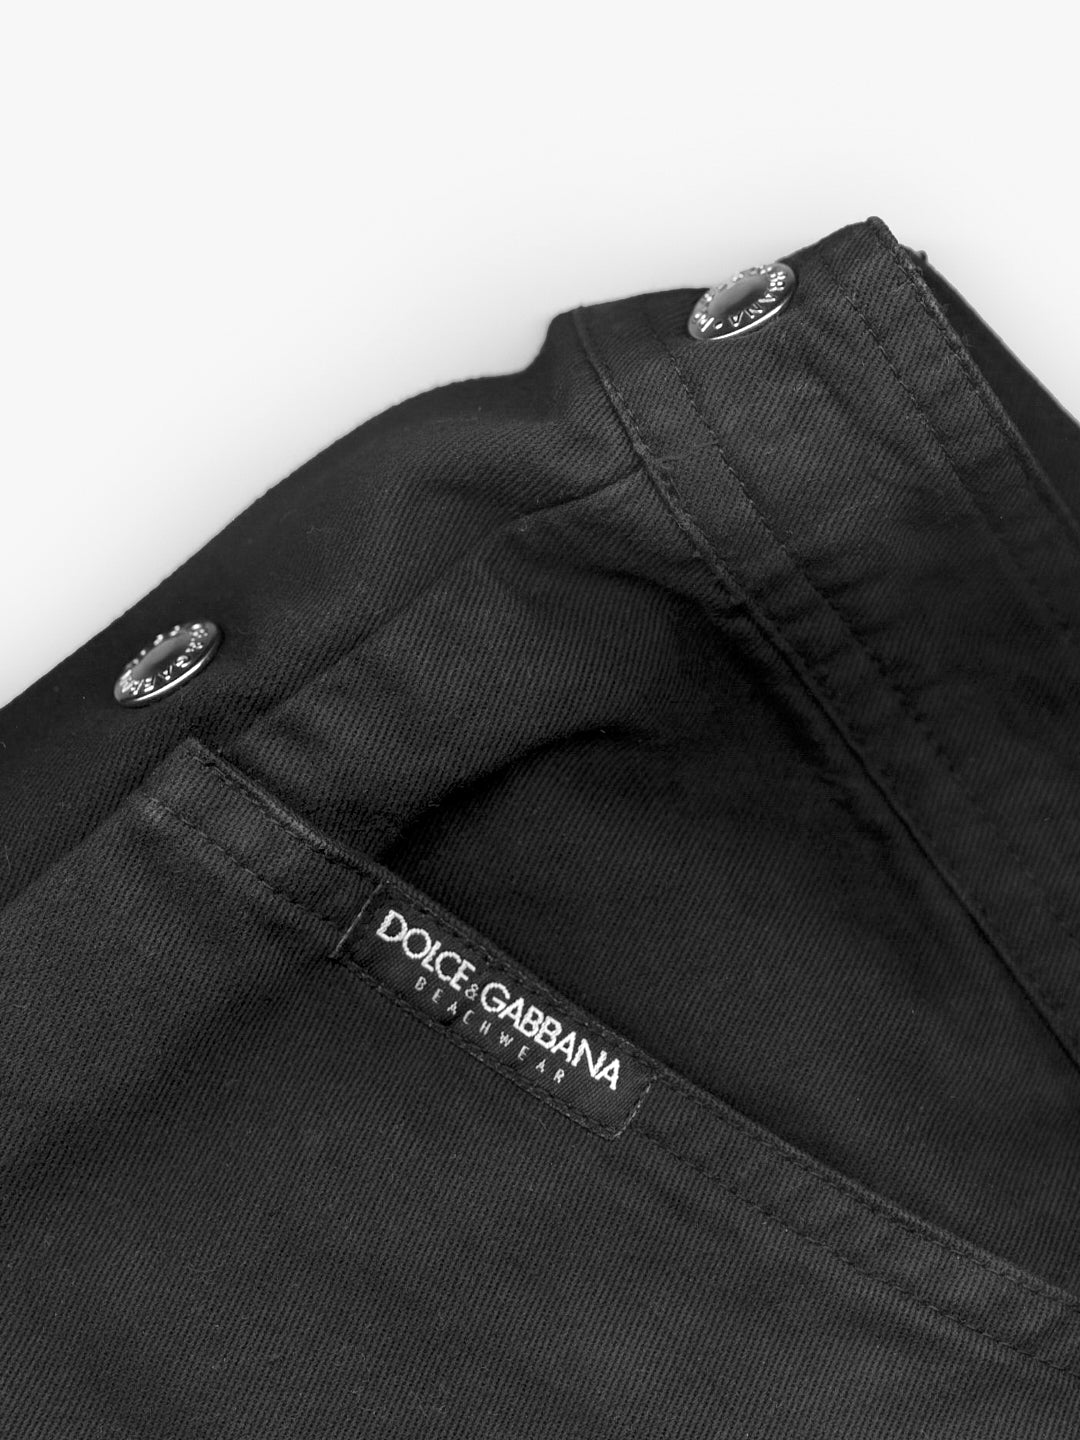 Dolce & Gabbana Snap Buttons Pants